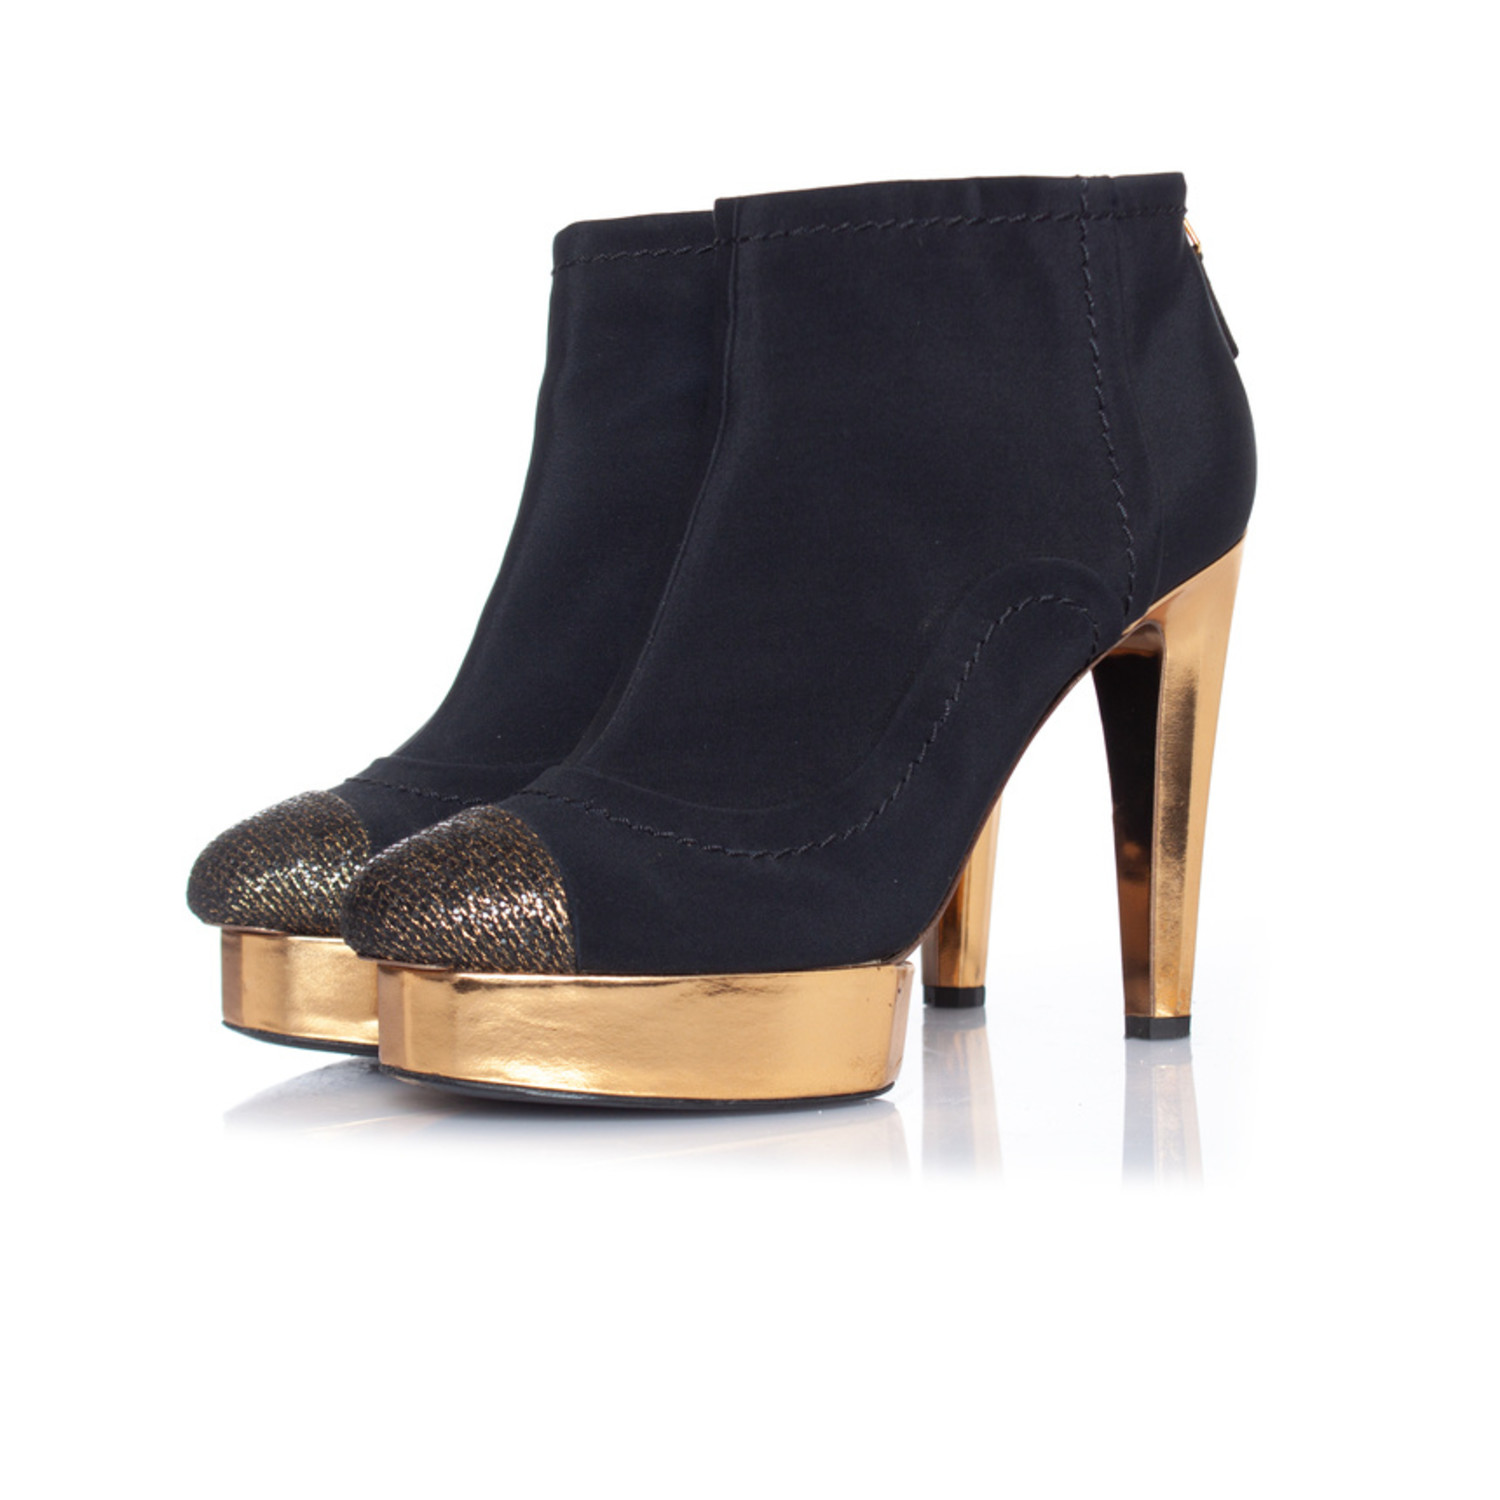 Chanel, Black ankle platform boots with gold heel - Unique